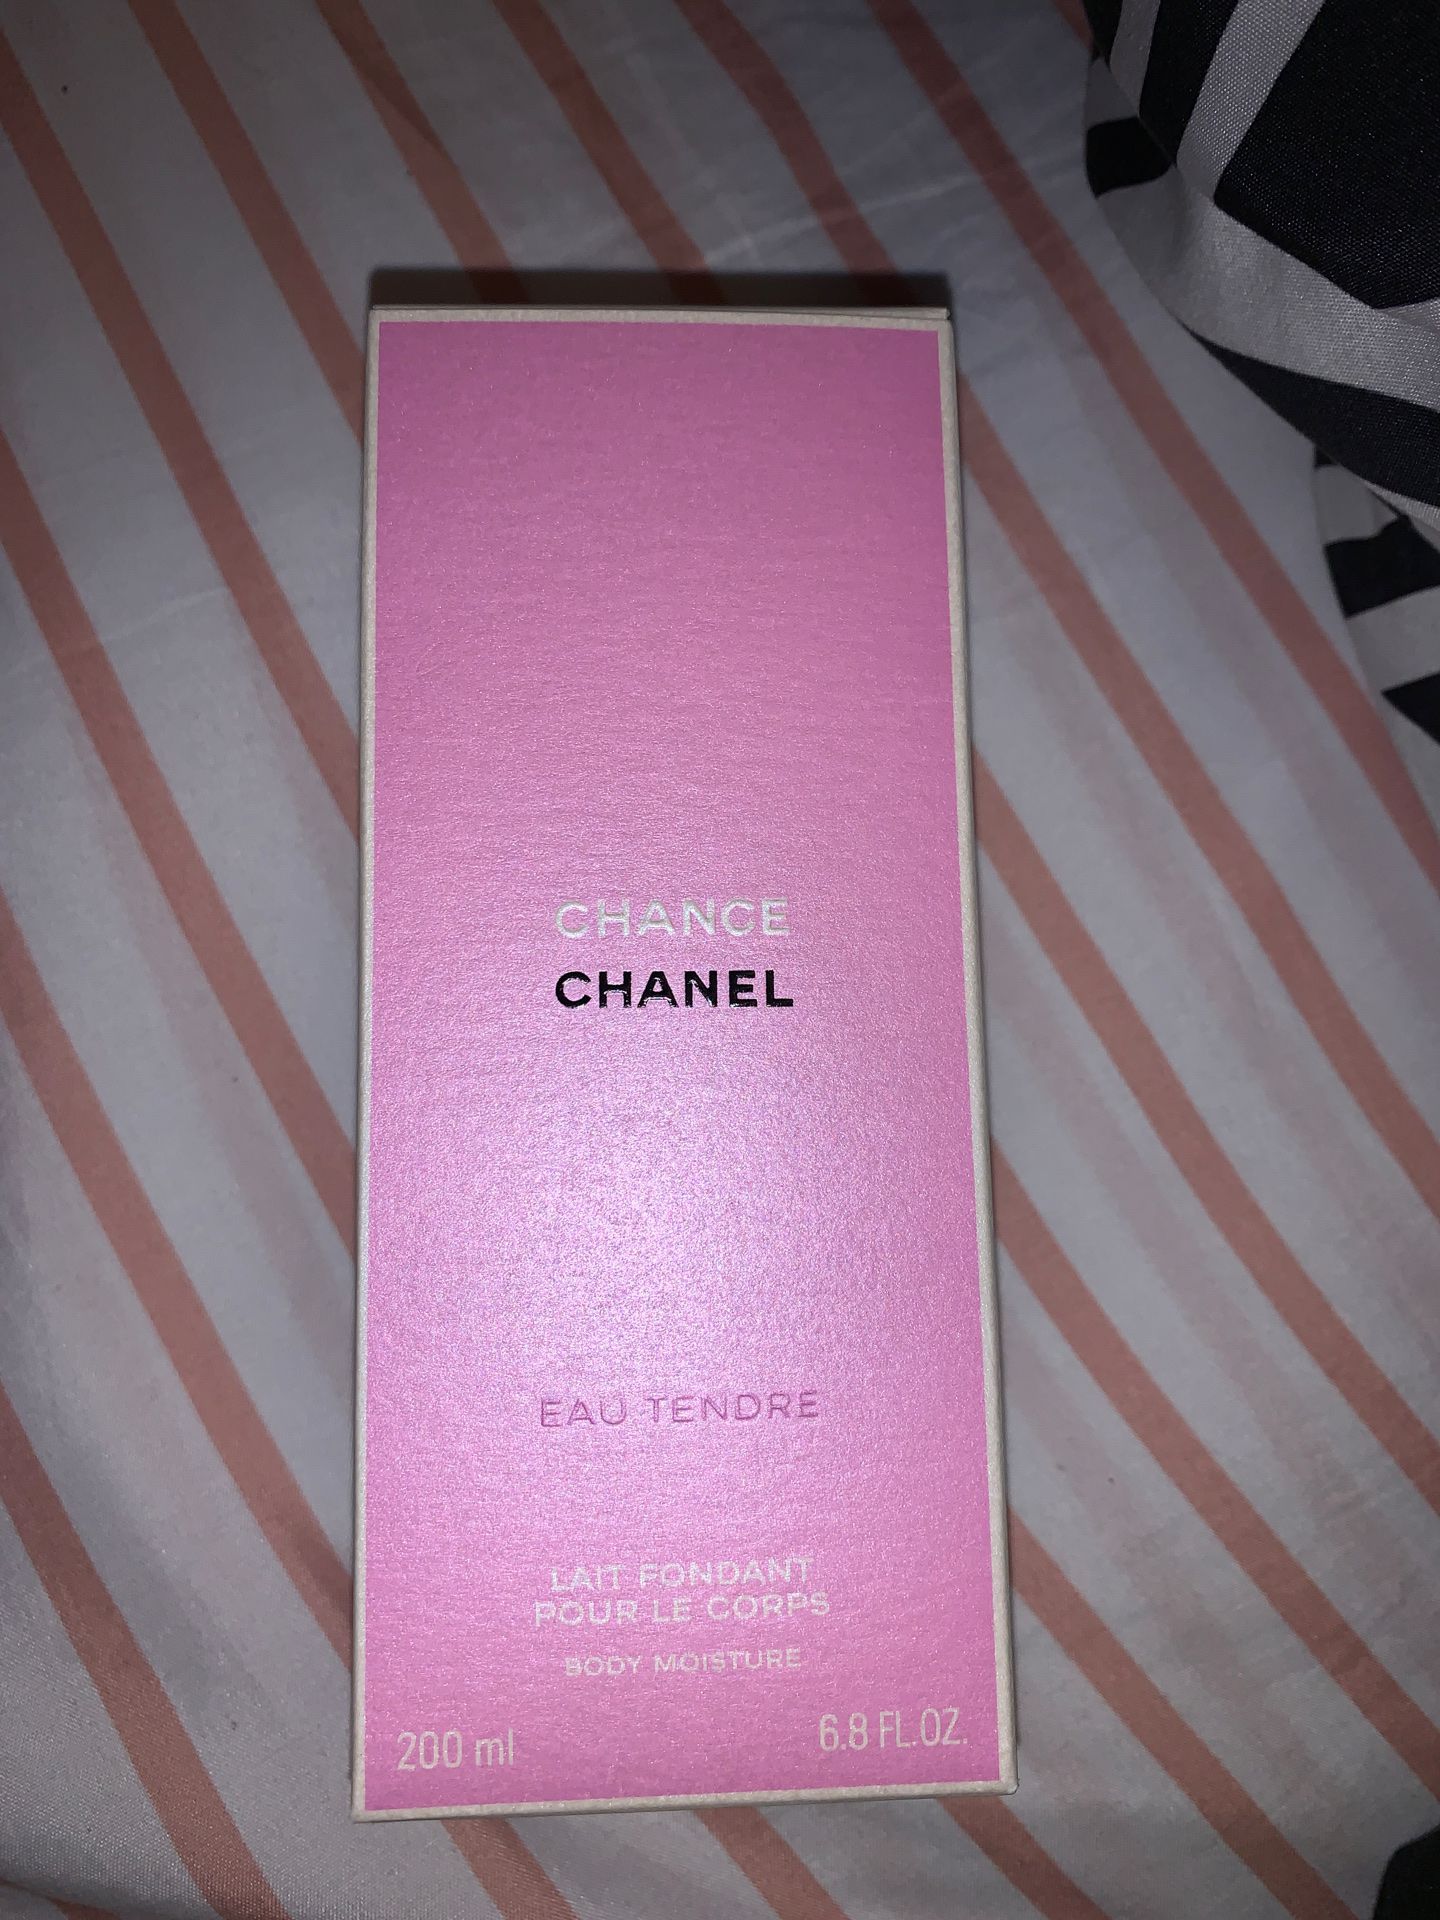 Chanel eau tendre perfume and lotion